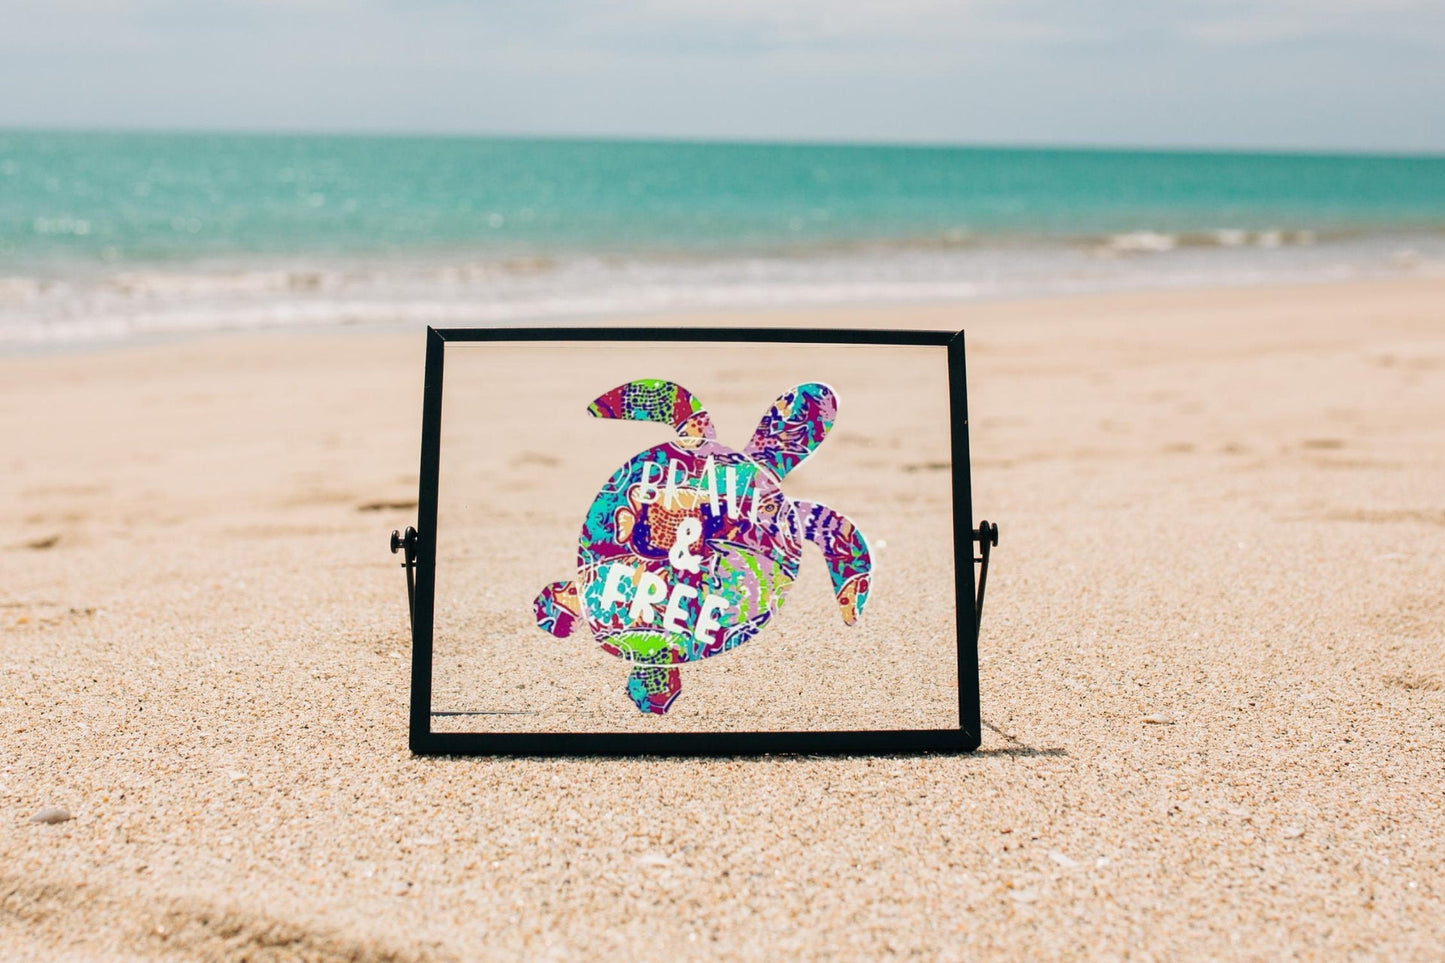 Sea Turtle Window Car Decal for Beach Lover, Sparkleberry pattern vinyl